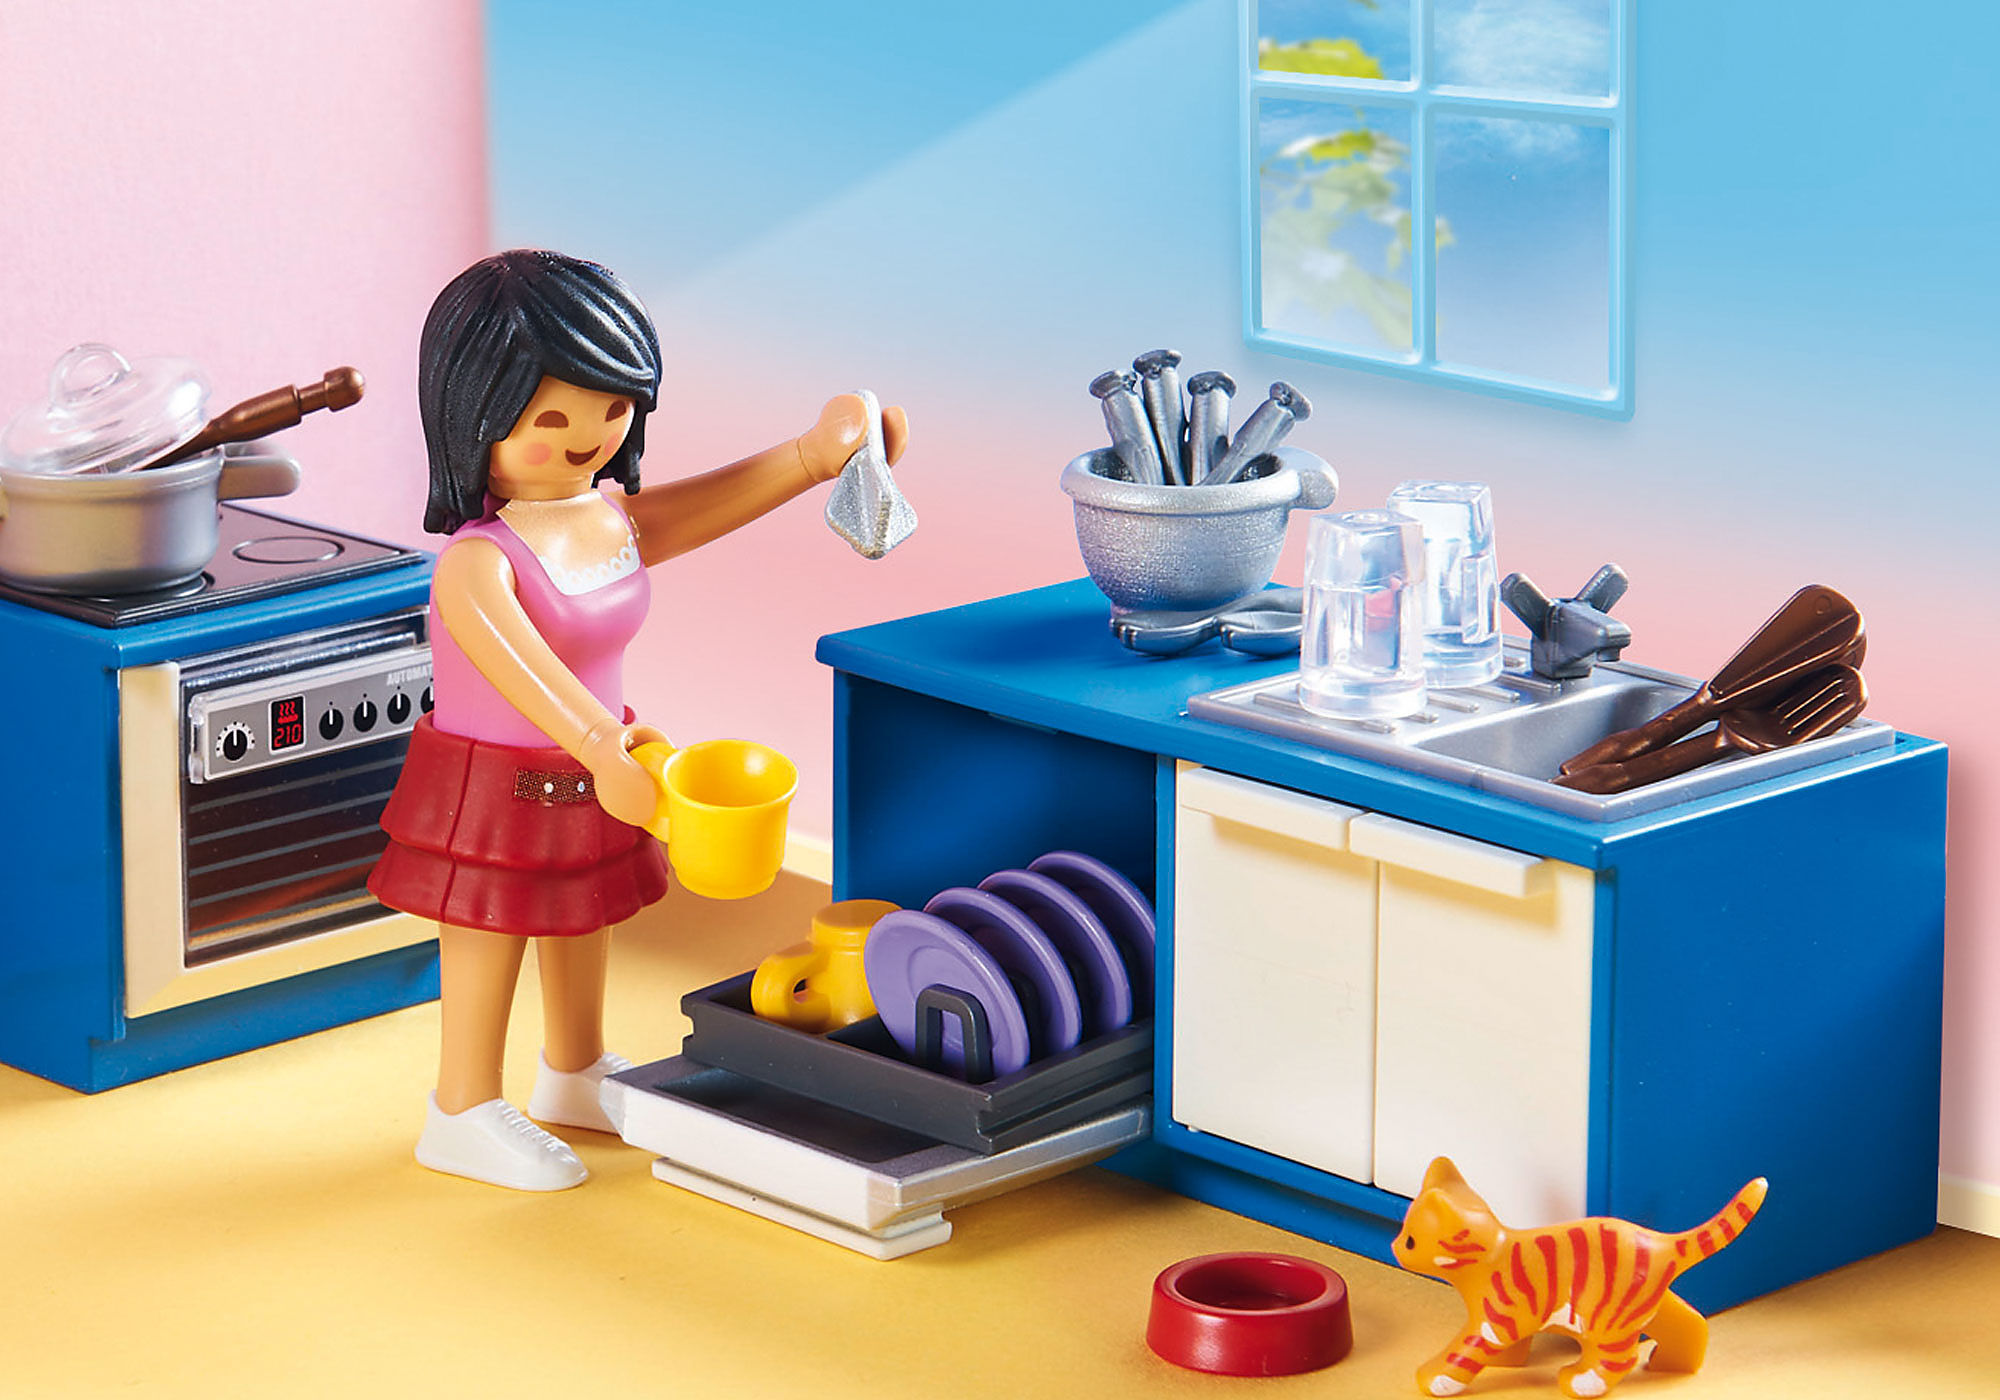 Playmobil Dollhouse Puppenhaus 70206 Familienküche + 70207